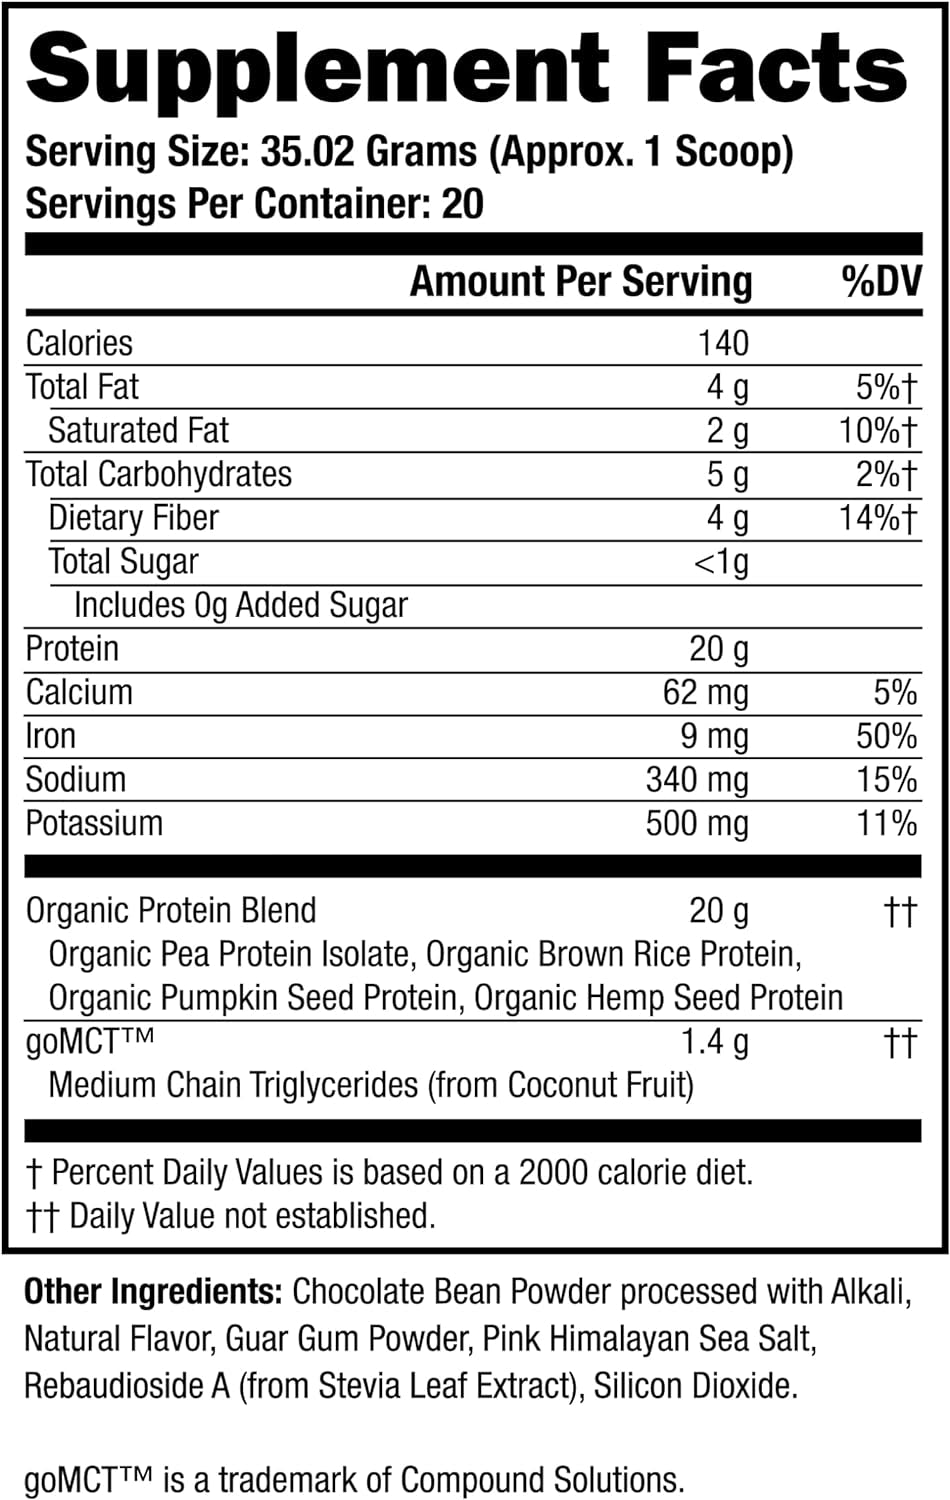 Twinlab Sport Vegan Protein Powder, Chocolate, 24.7 Oz - 20 Servings (Pack of 2)